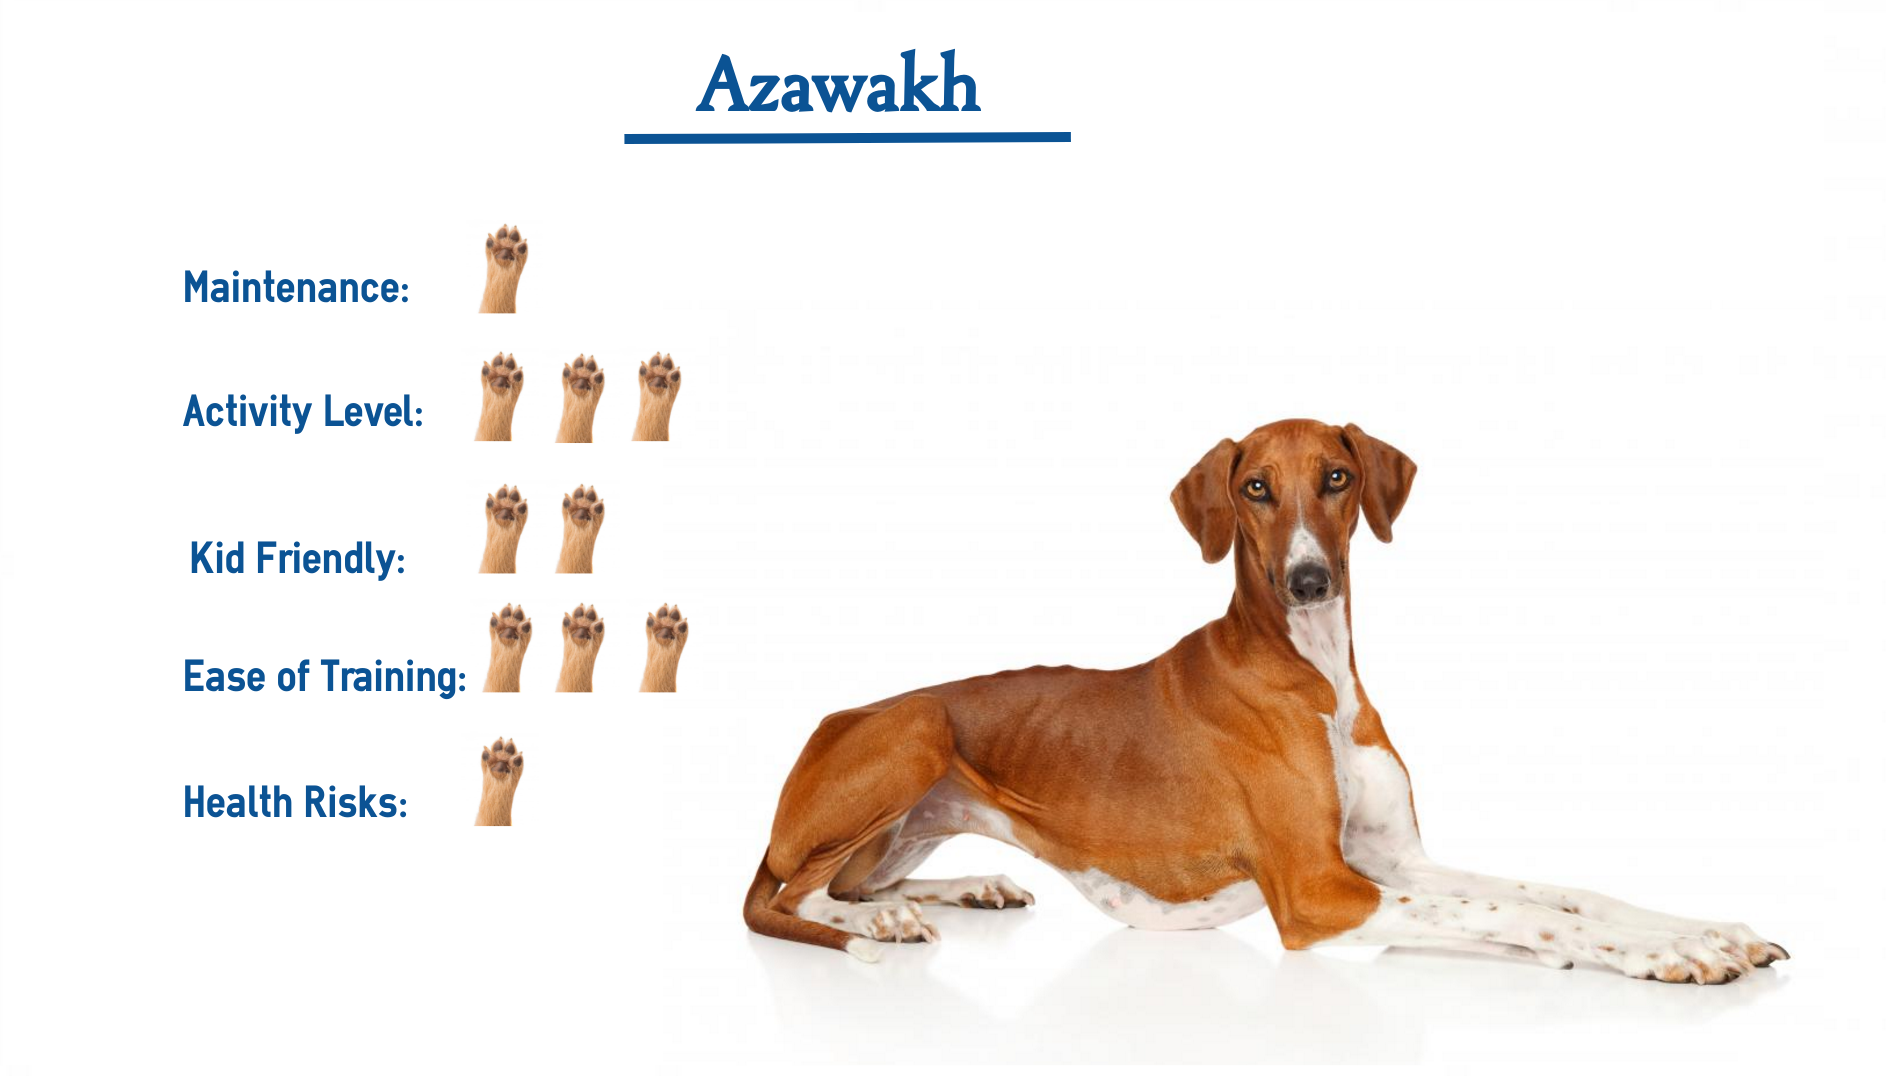 azawakh dog